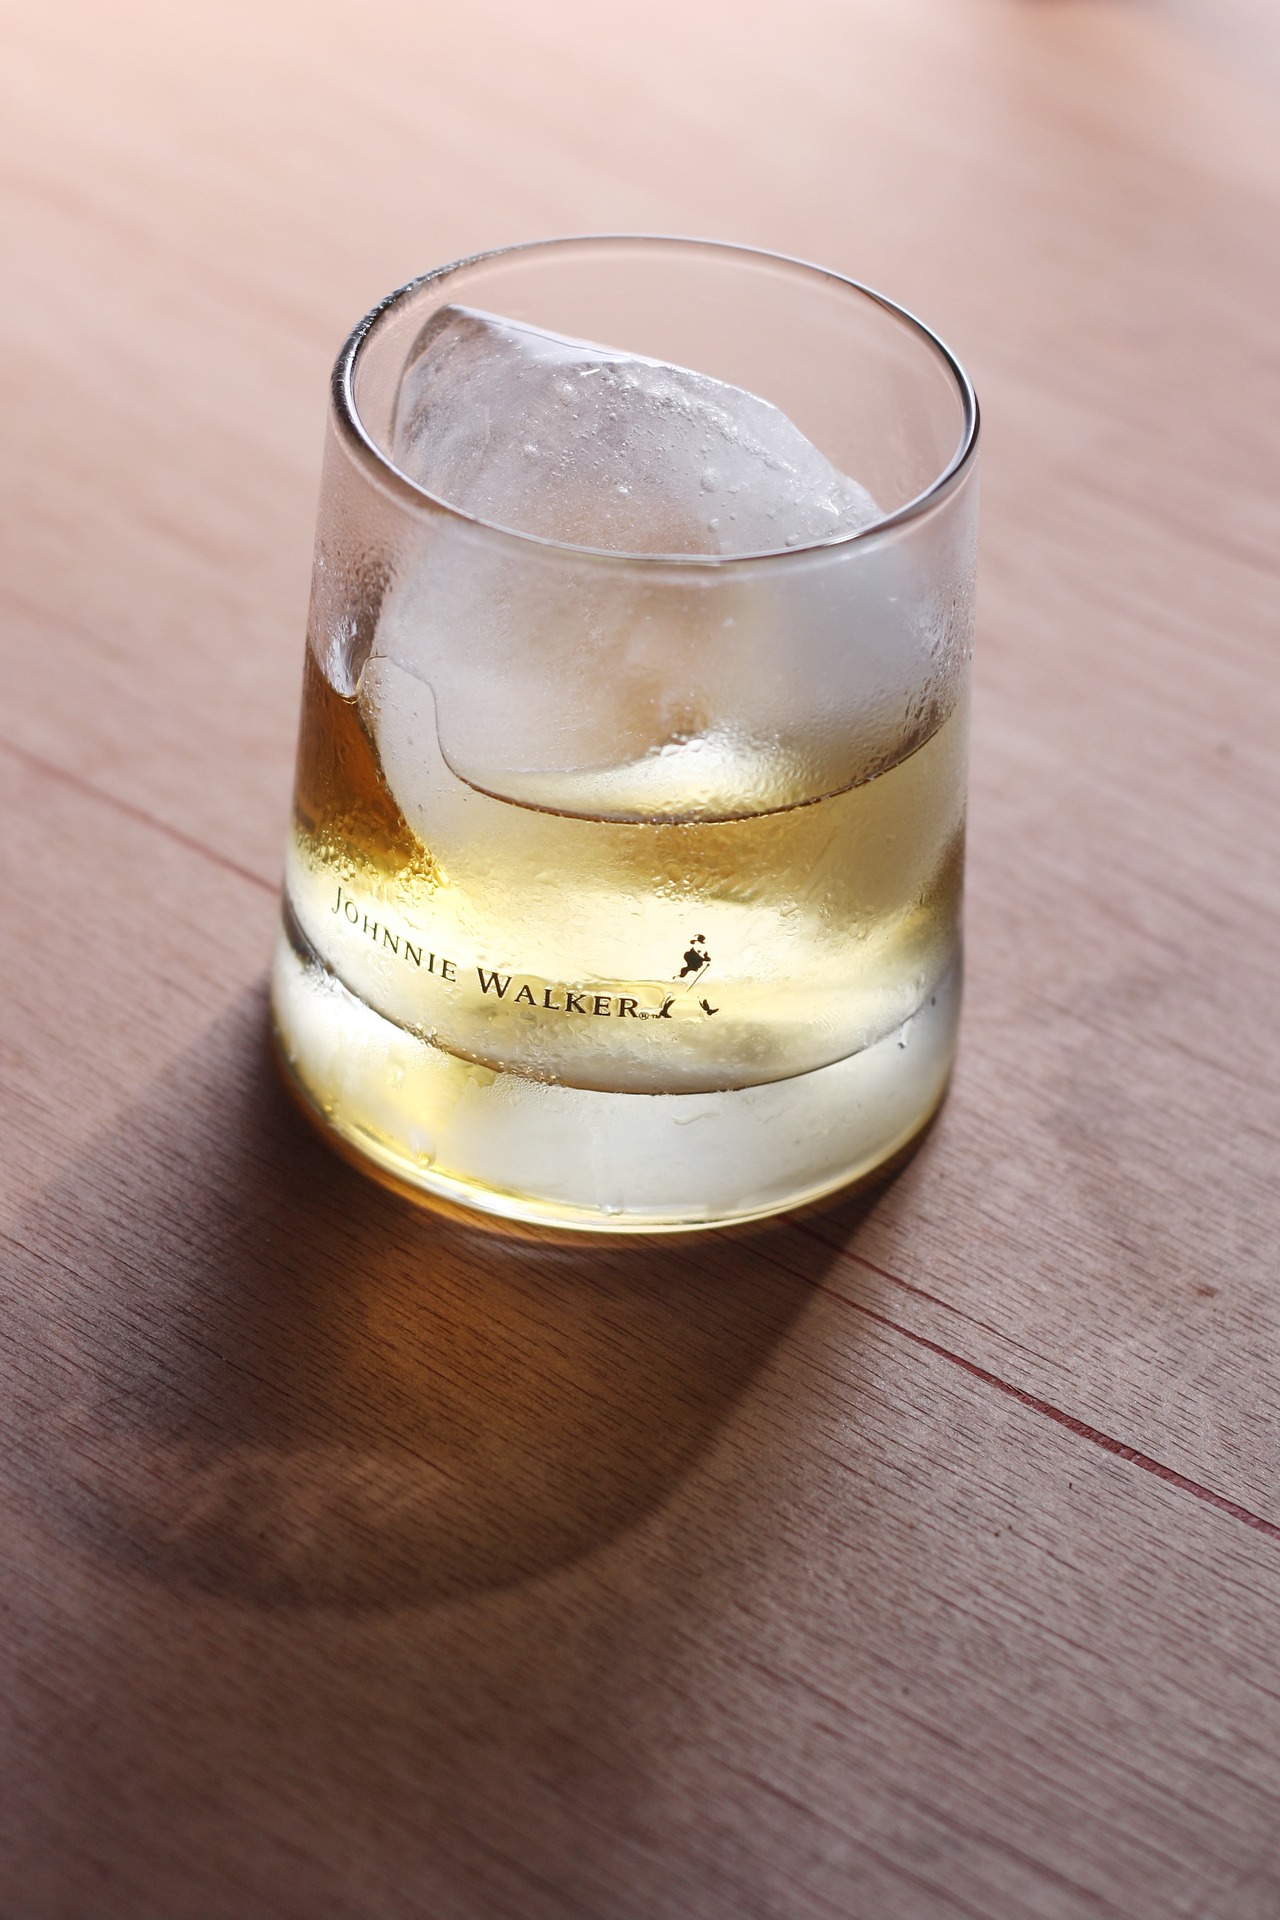 Whisky Johnnie Walker Blue Label Ghost And Rare Port Ellen Whisky Scozzese Blended